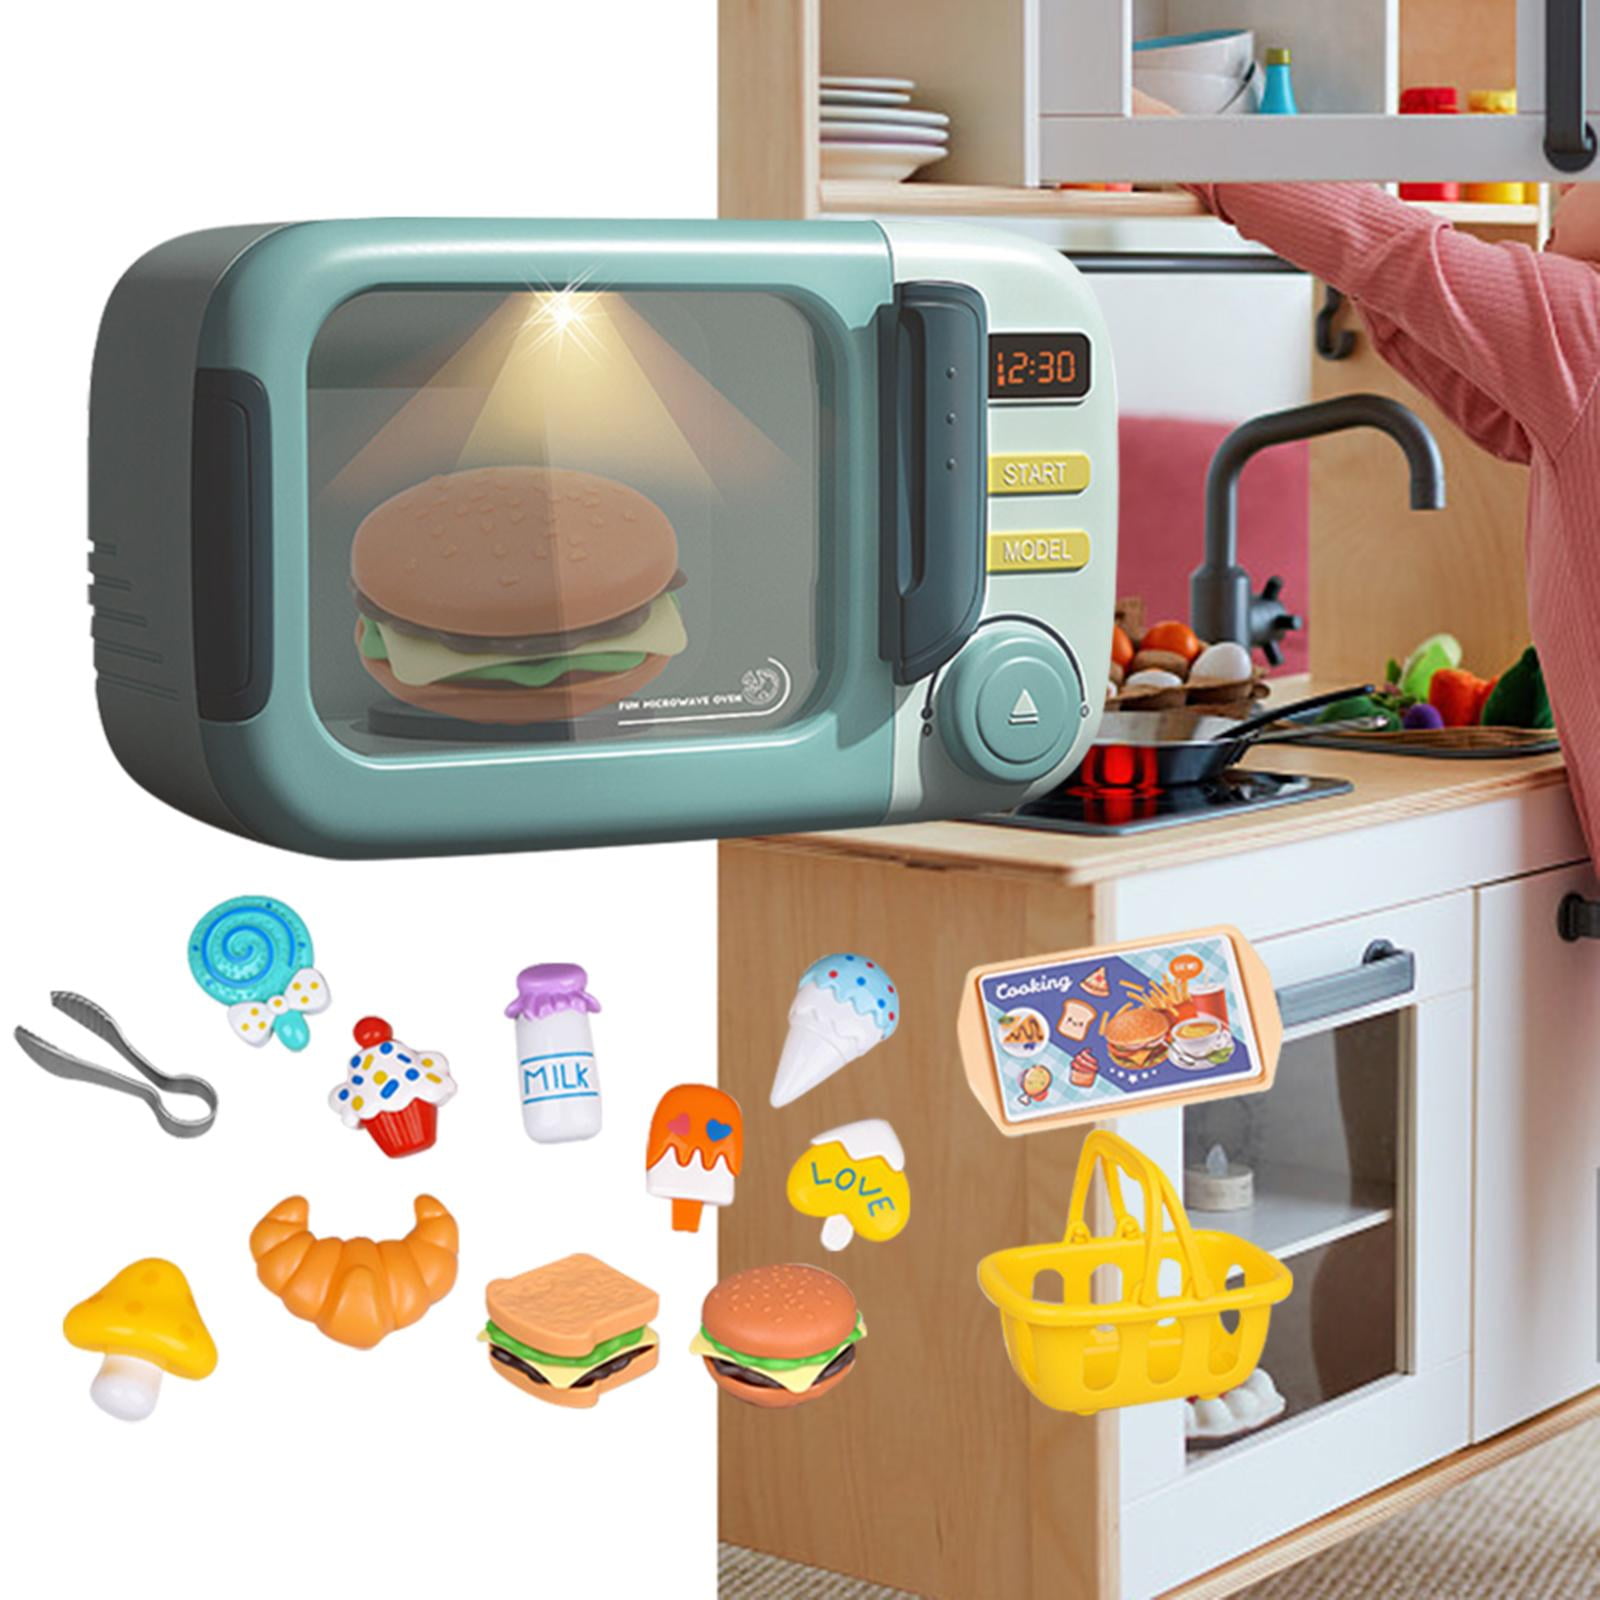 Mini Microwave Oven Model, Fine Craftsmanship Vivid Delicate Dollhouse Microwave Oven Mini Portable for Dollhouse Decorations